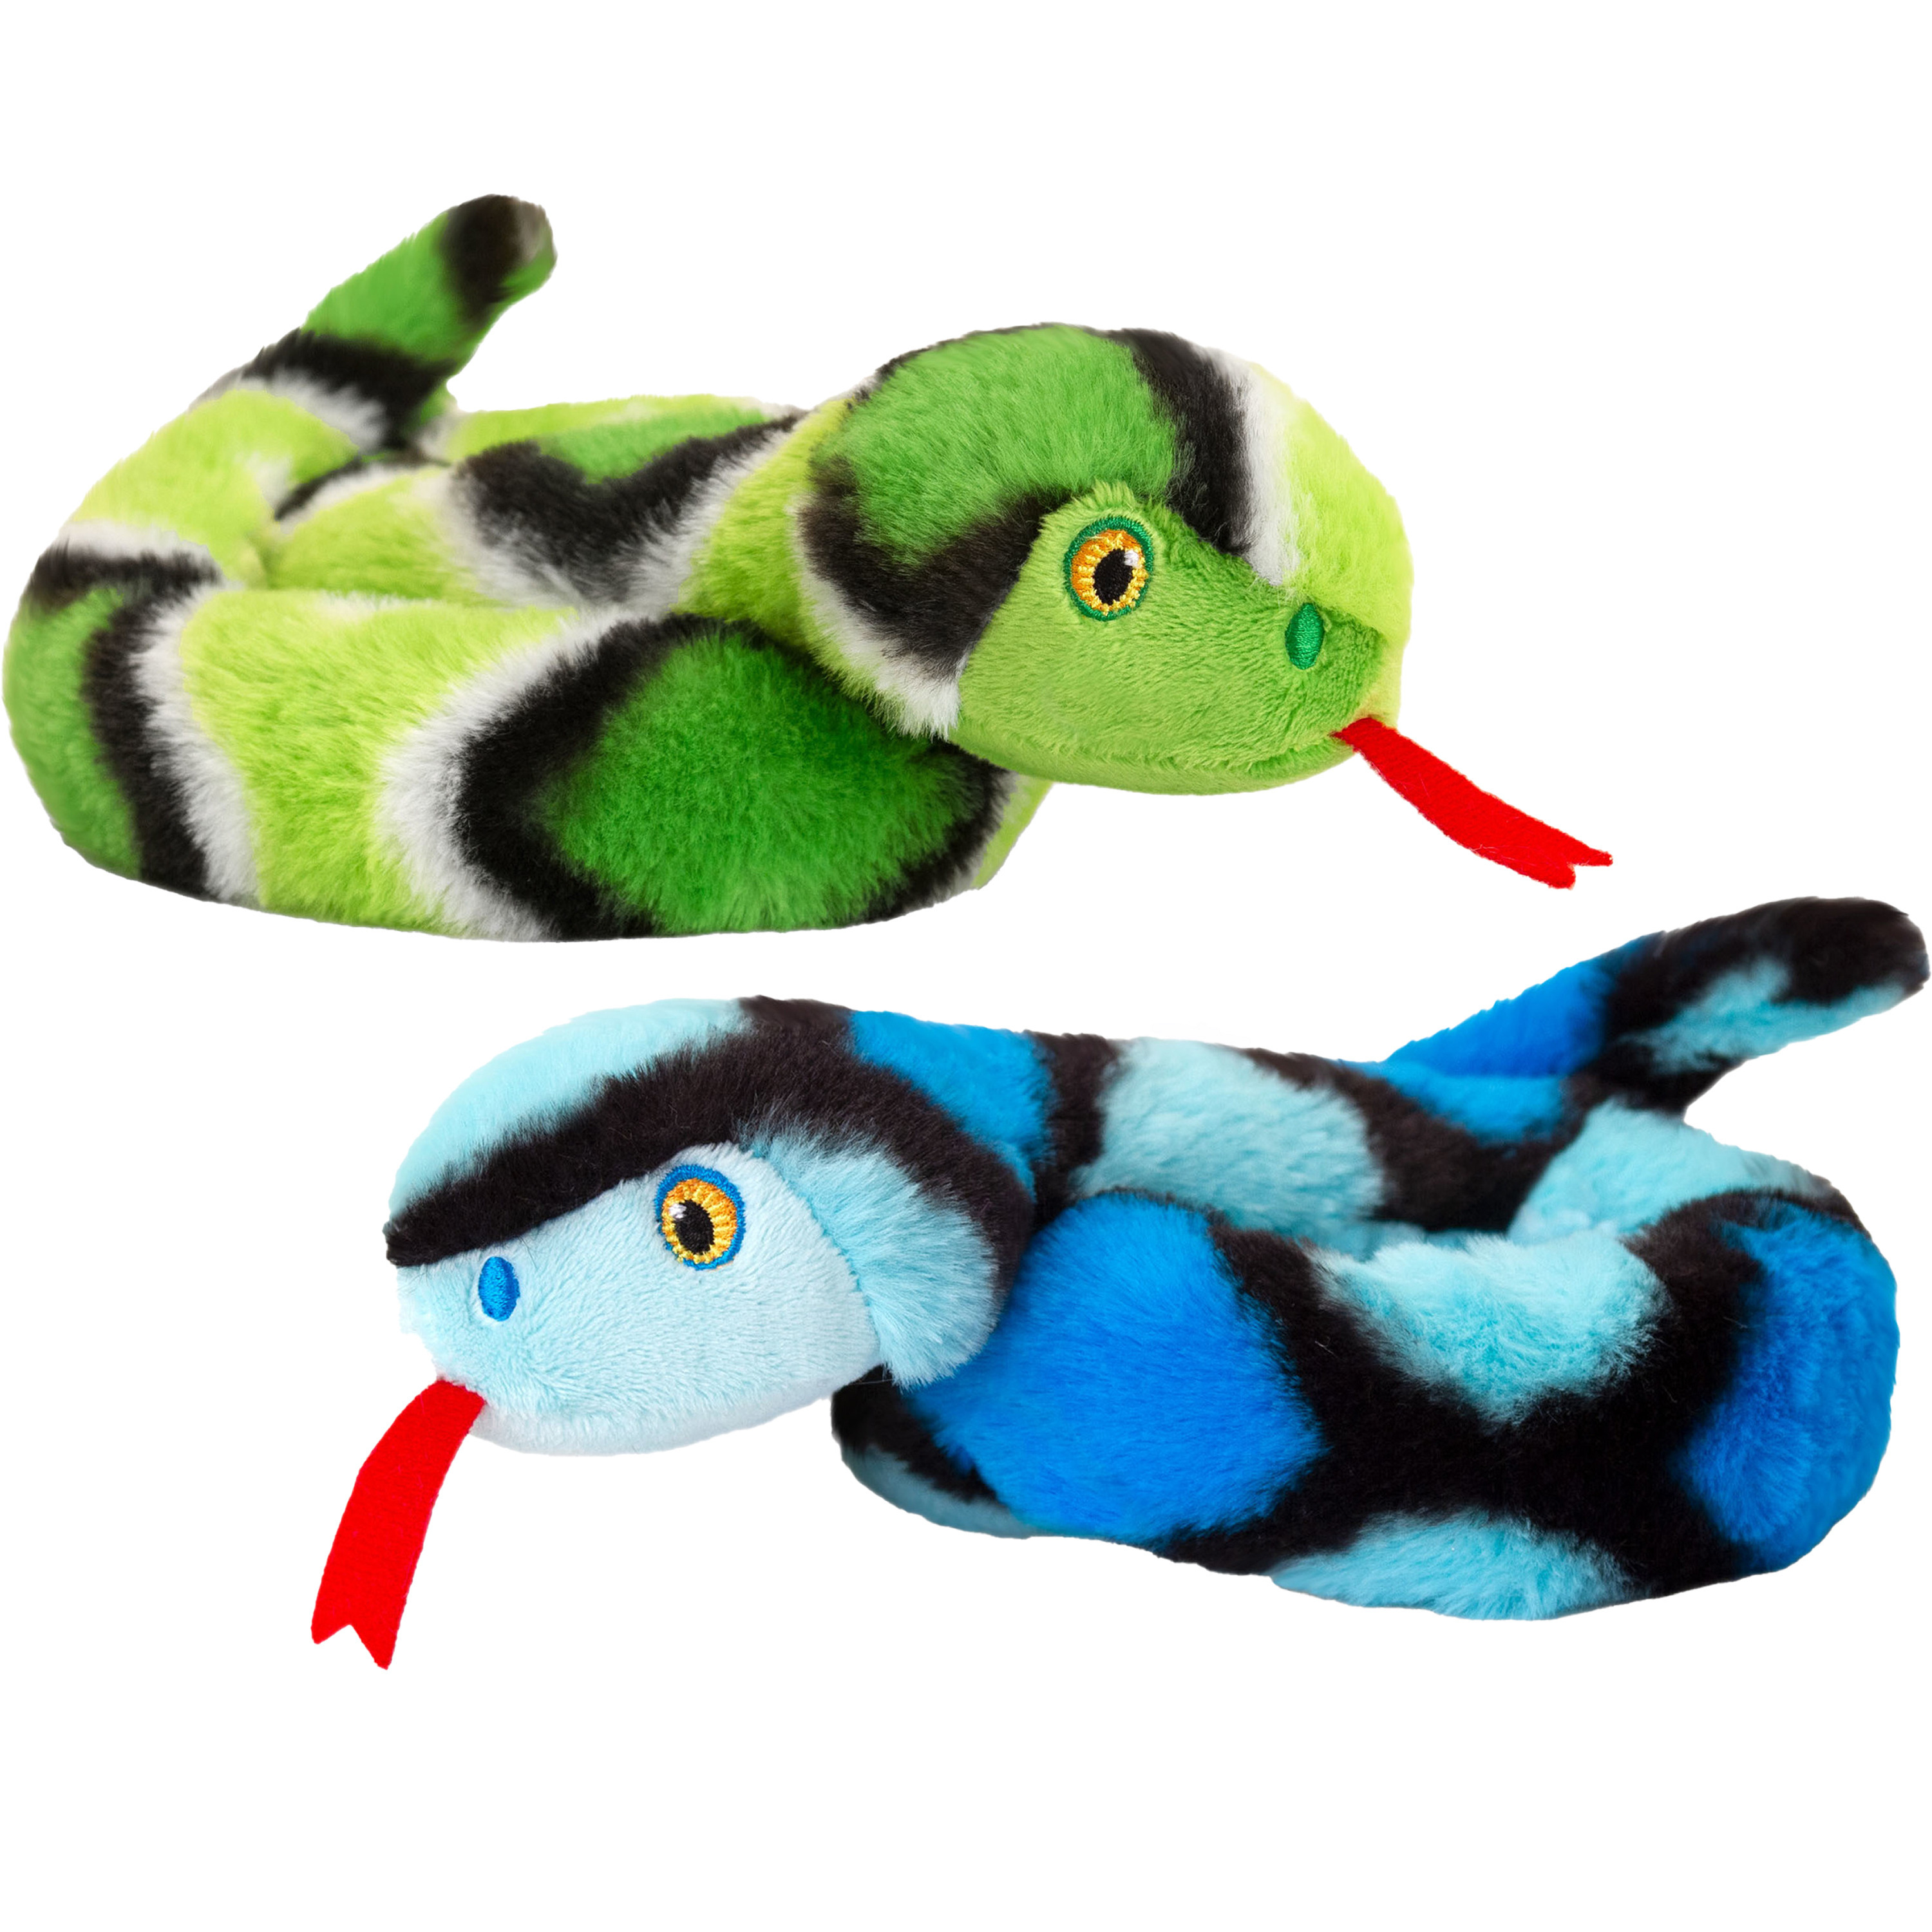 Pluche knuffel dieren kleine opgerolde slangen blauw en groen 65 cm